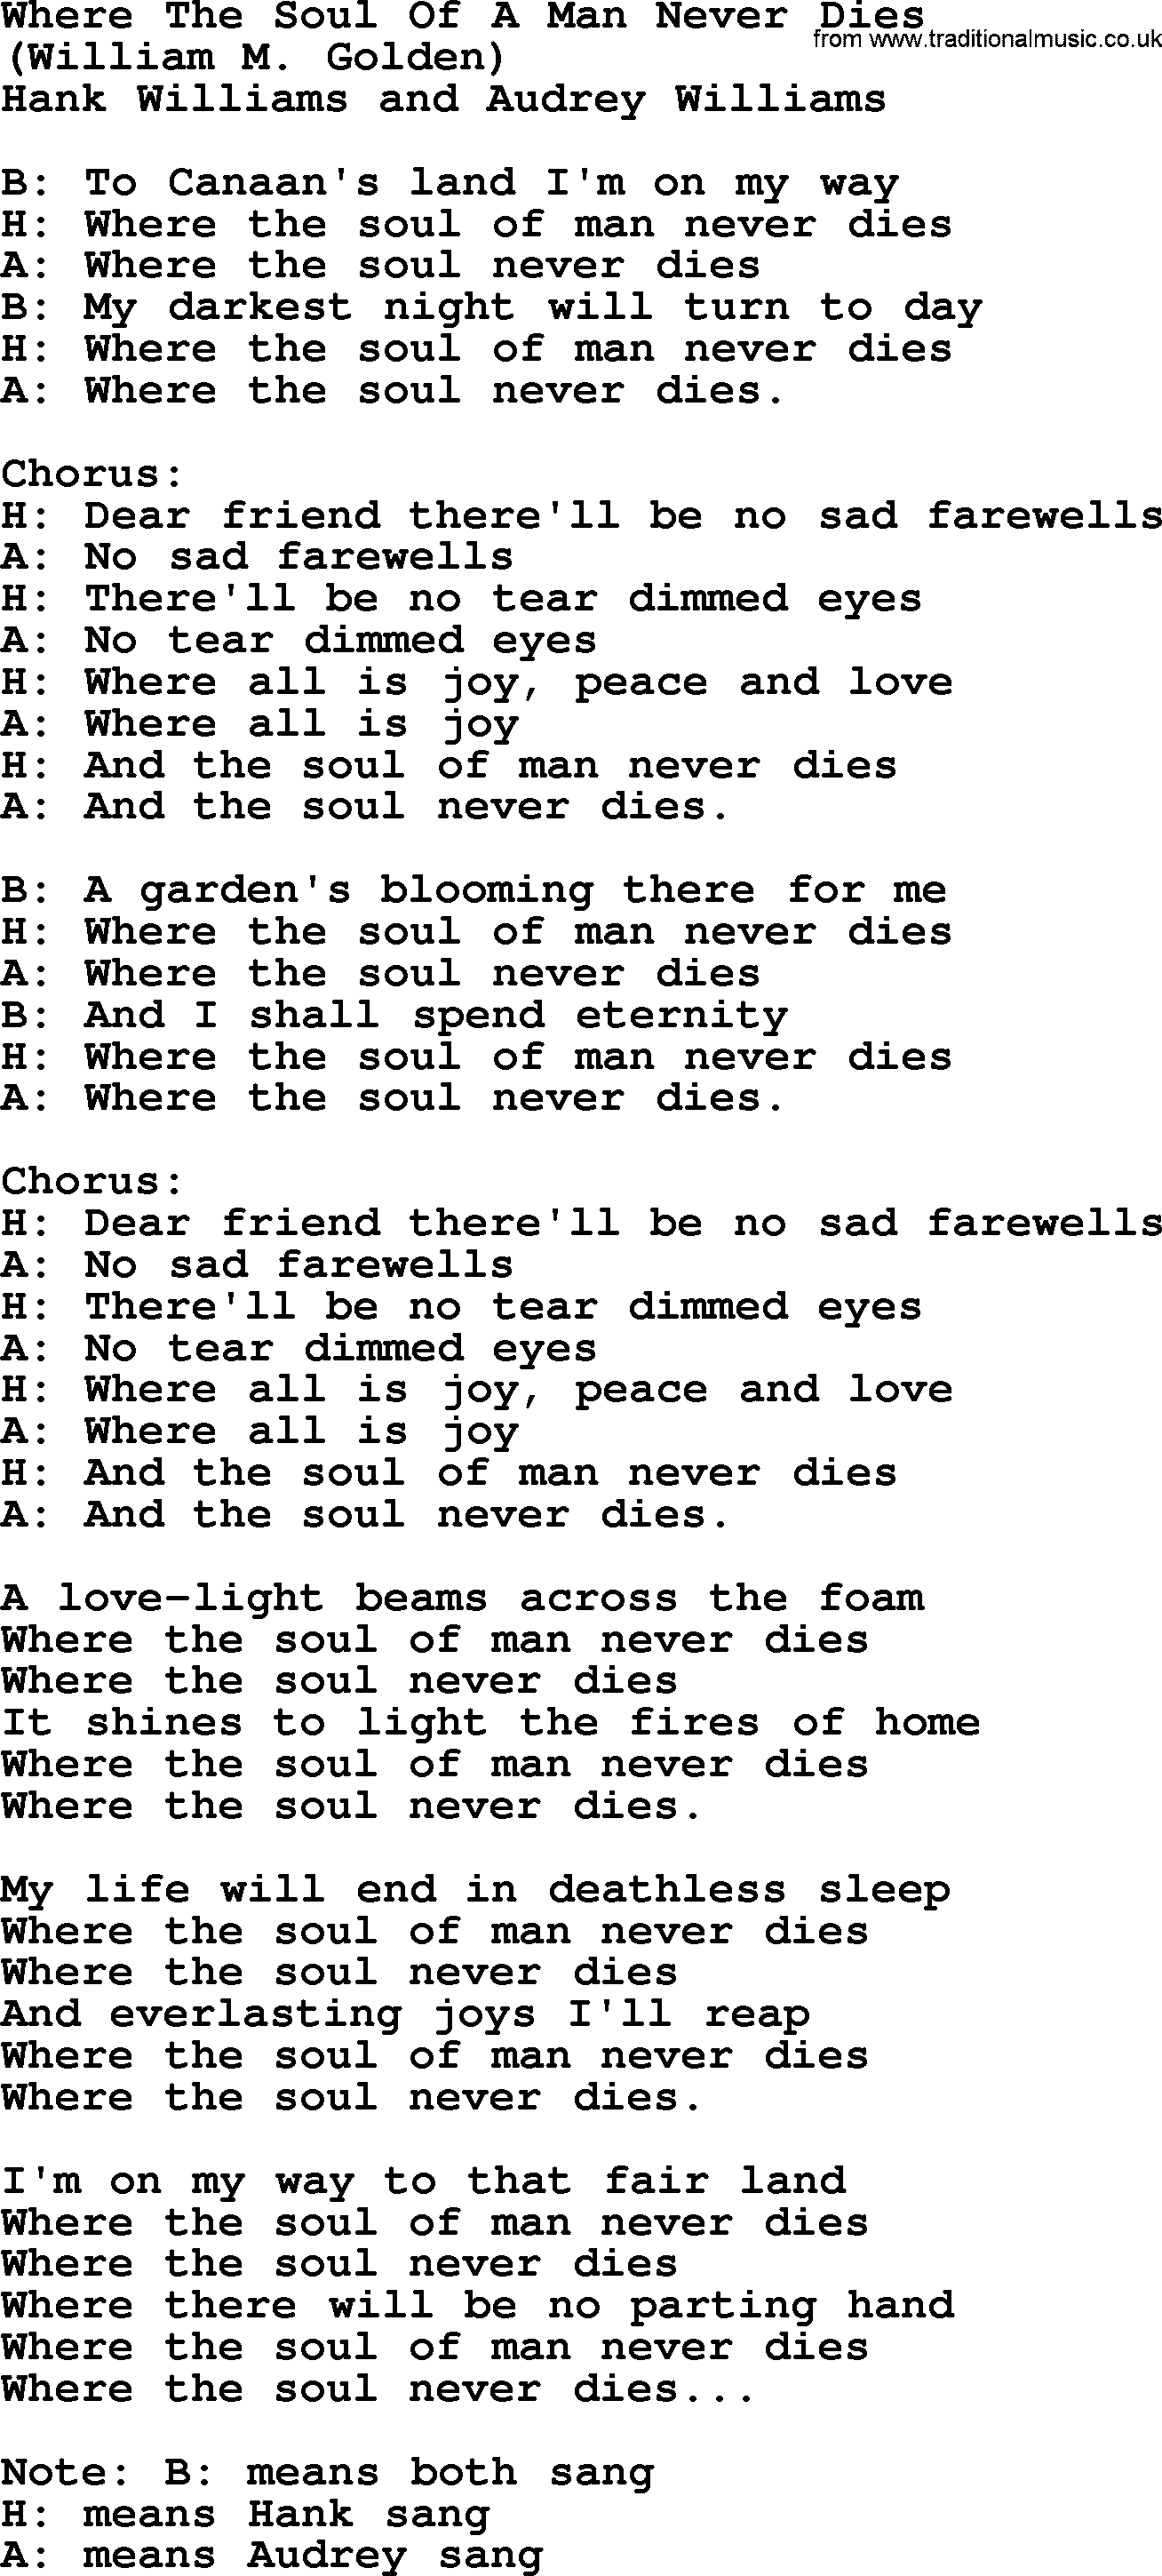 Hank Williams song Where The Soul Of A Man Never Dies, lyrics